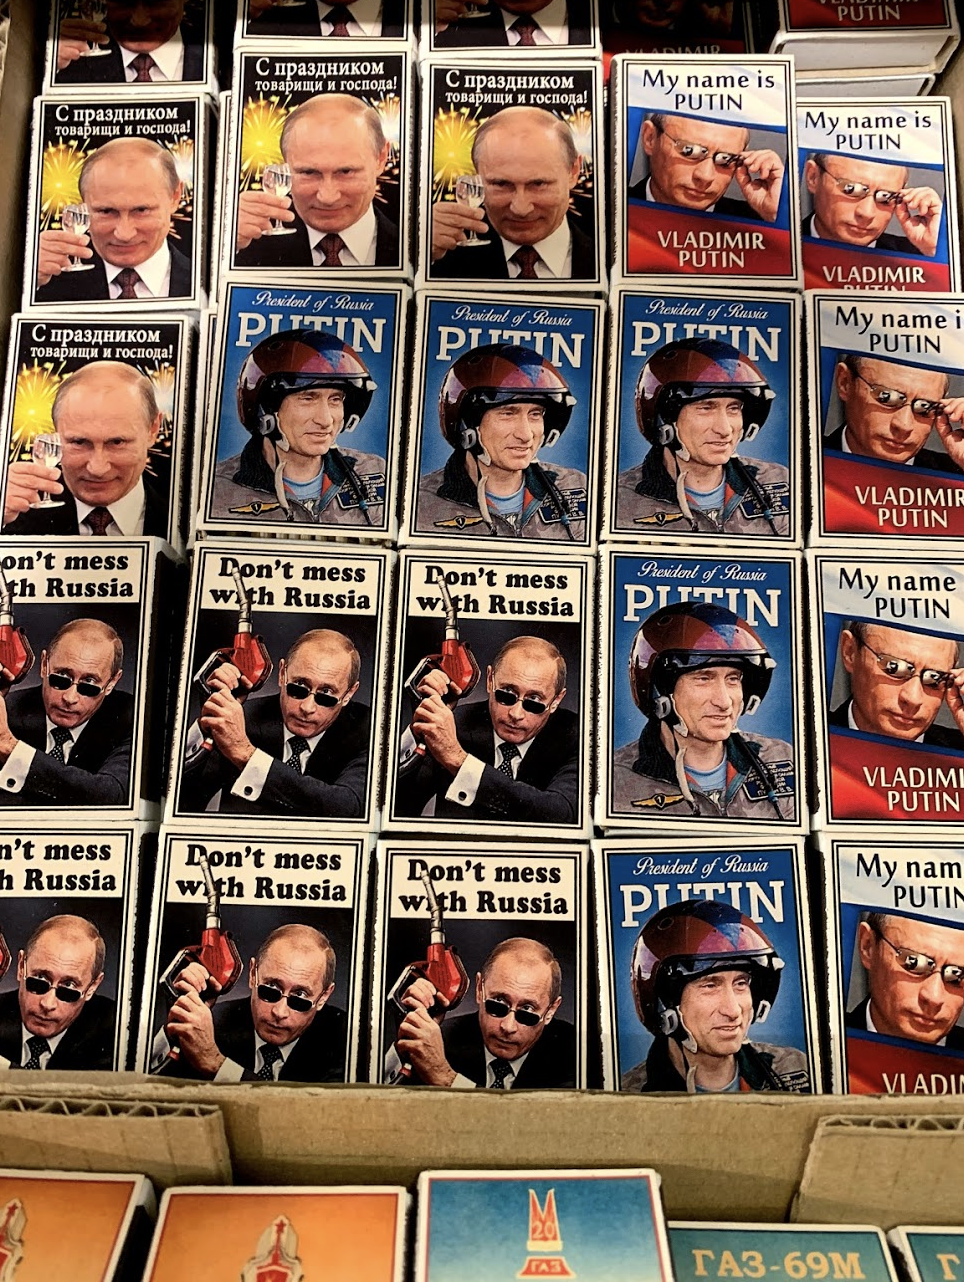 Putin memorabilia at Ruslania, Helsinki